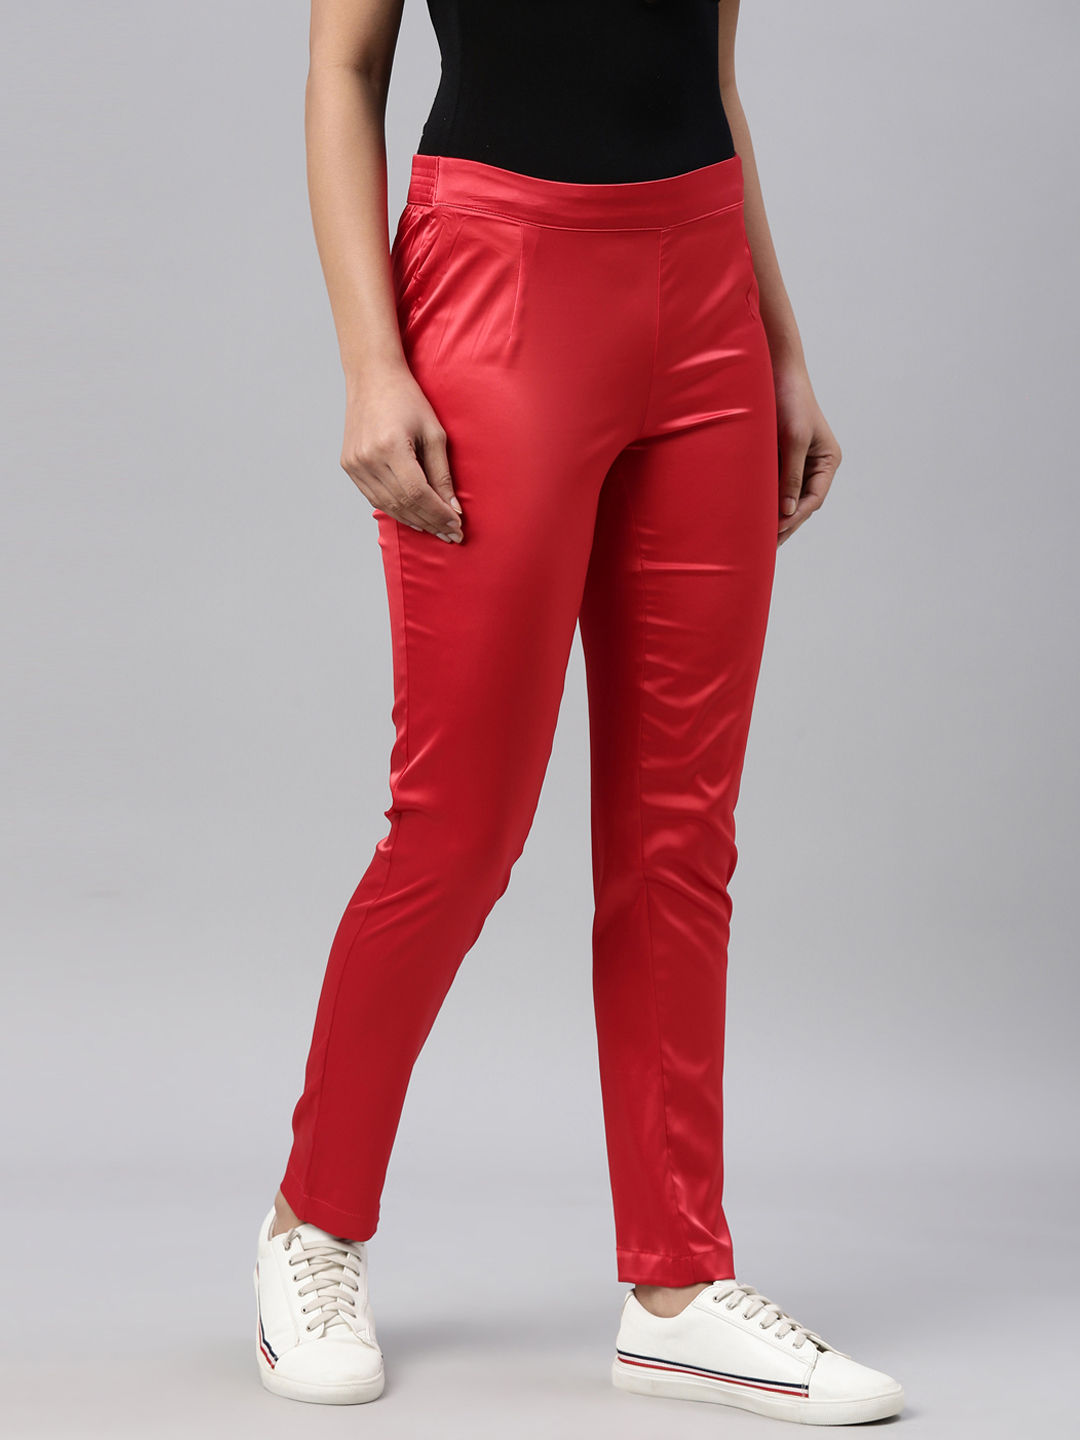 VERO MODA Trousers and Pants  Buy VERO MODA Women Solid Maroon Pant Online   Nykaa Fashion